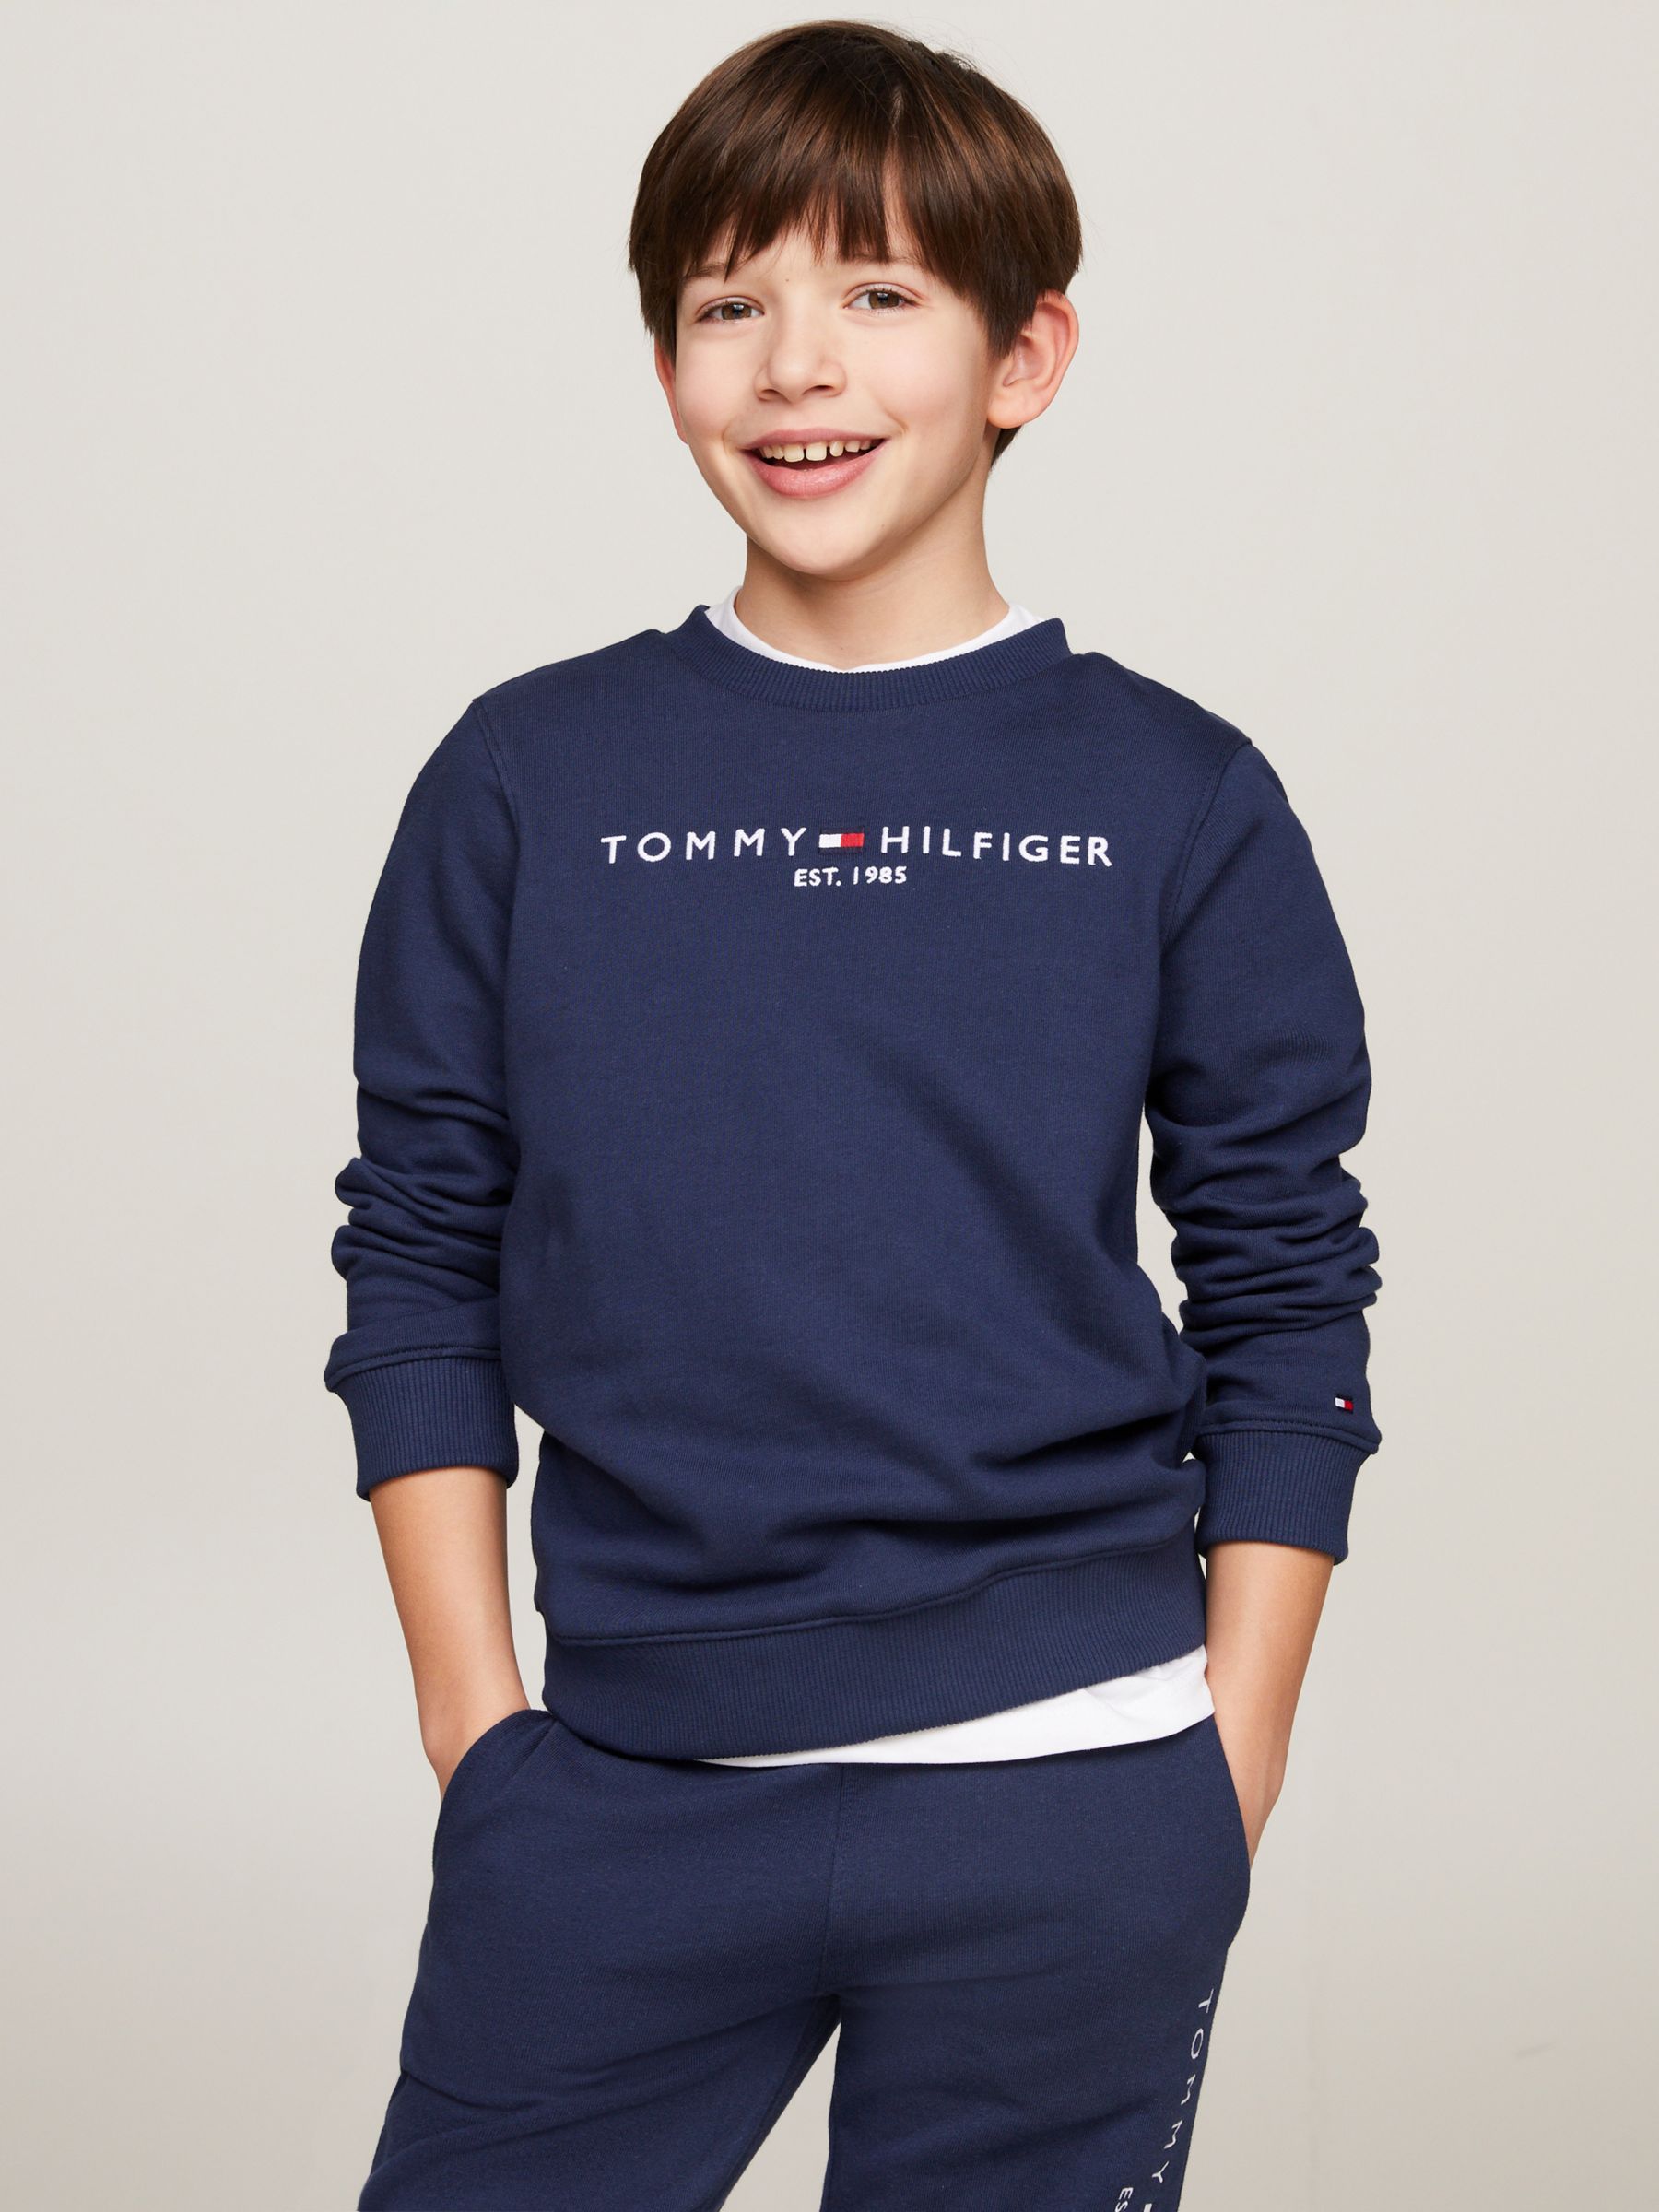 Tommy Hilfiger Kids\' Essential Organic Cotton Logo Sweatshirt, Twilight  Navy at John Lewis & Partners